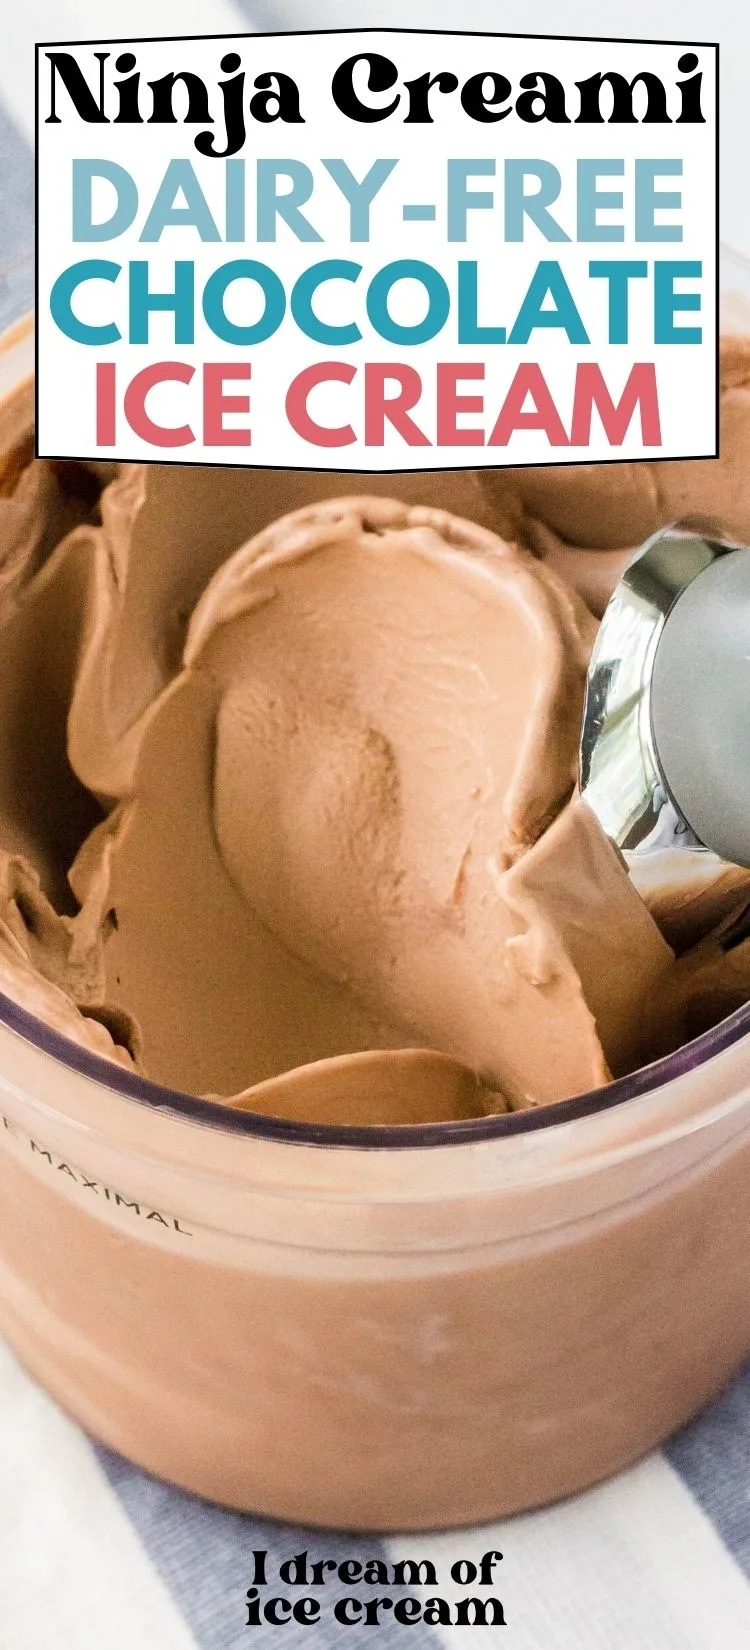 close-up of an ice cream scoop swirling Ninja Creami dairy free chocolate ice cream.